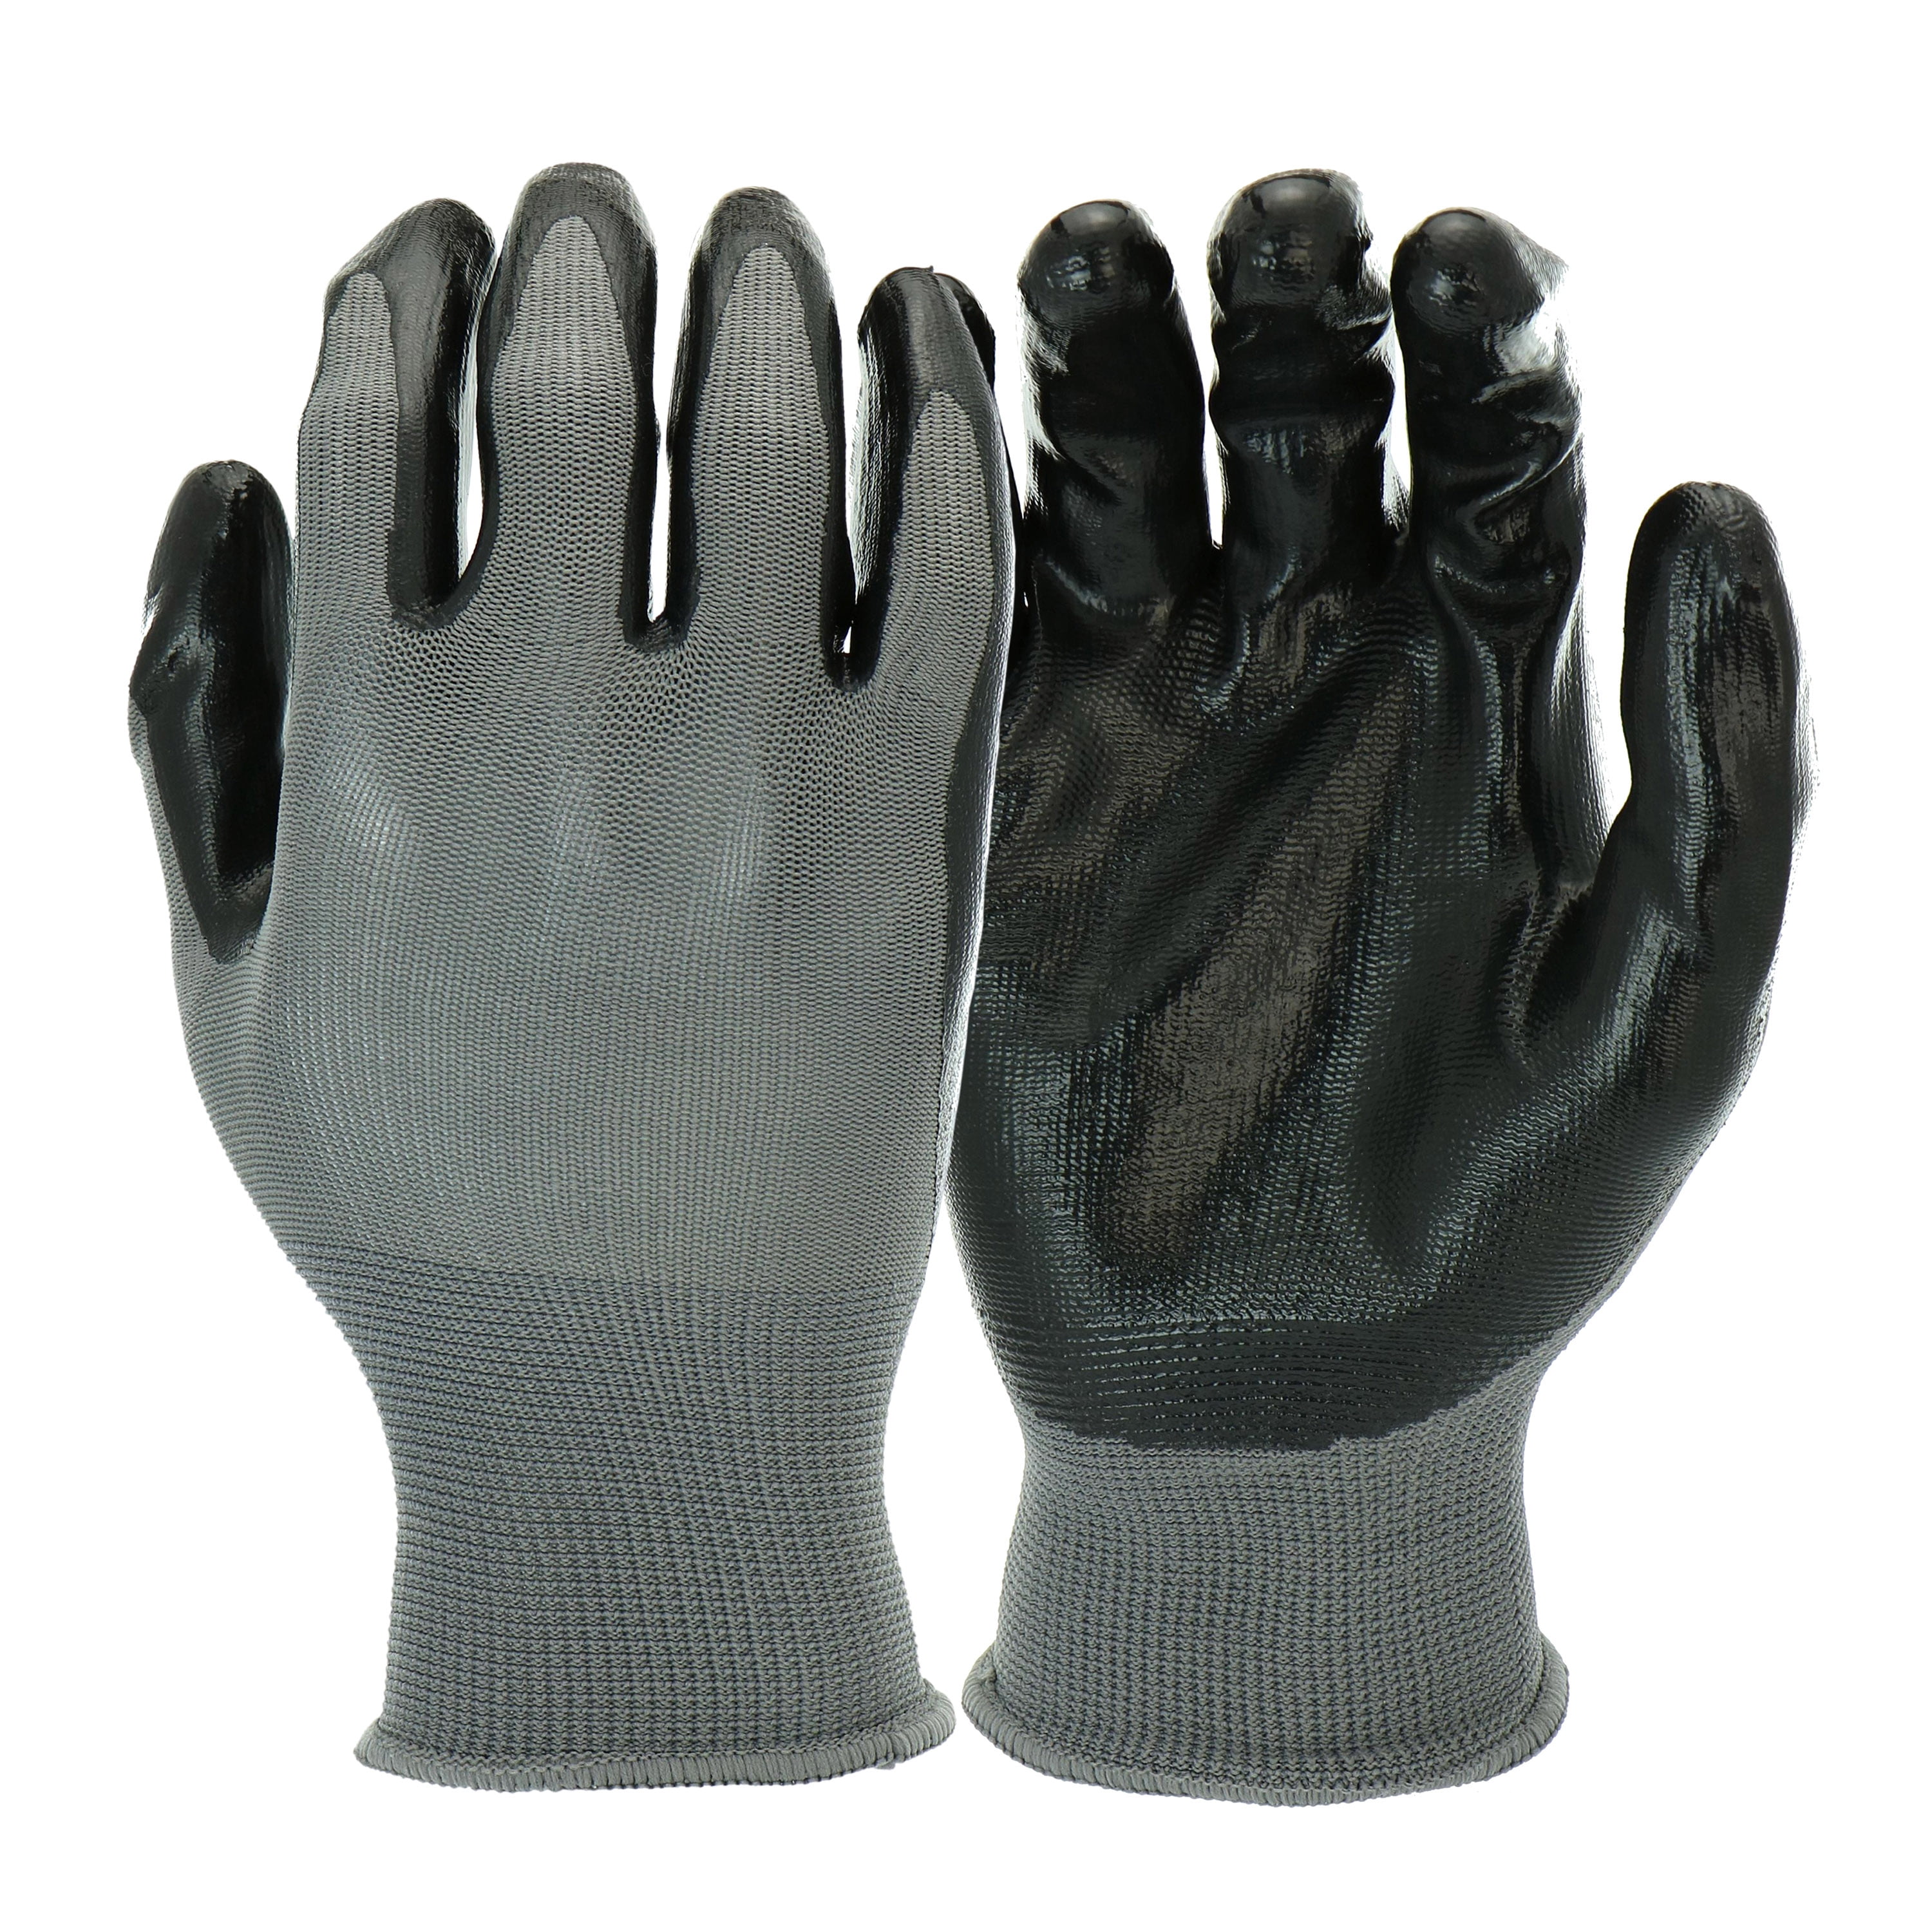 Black Medium Duty Details about   Hyper Tough Multipurpose Nitrile-Grip Gloves Large 3 Pair 